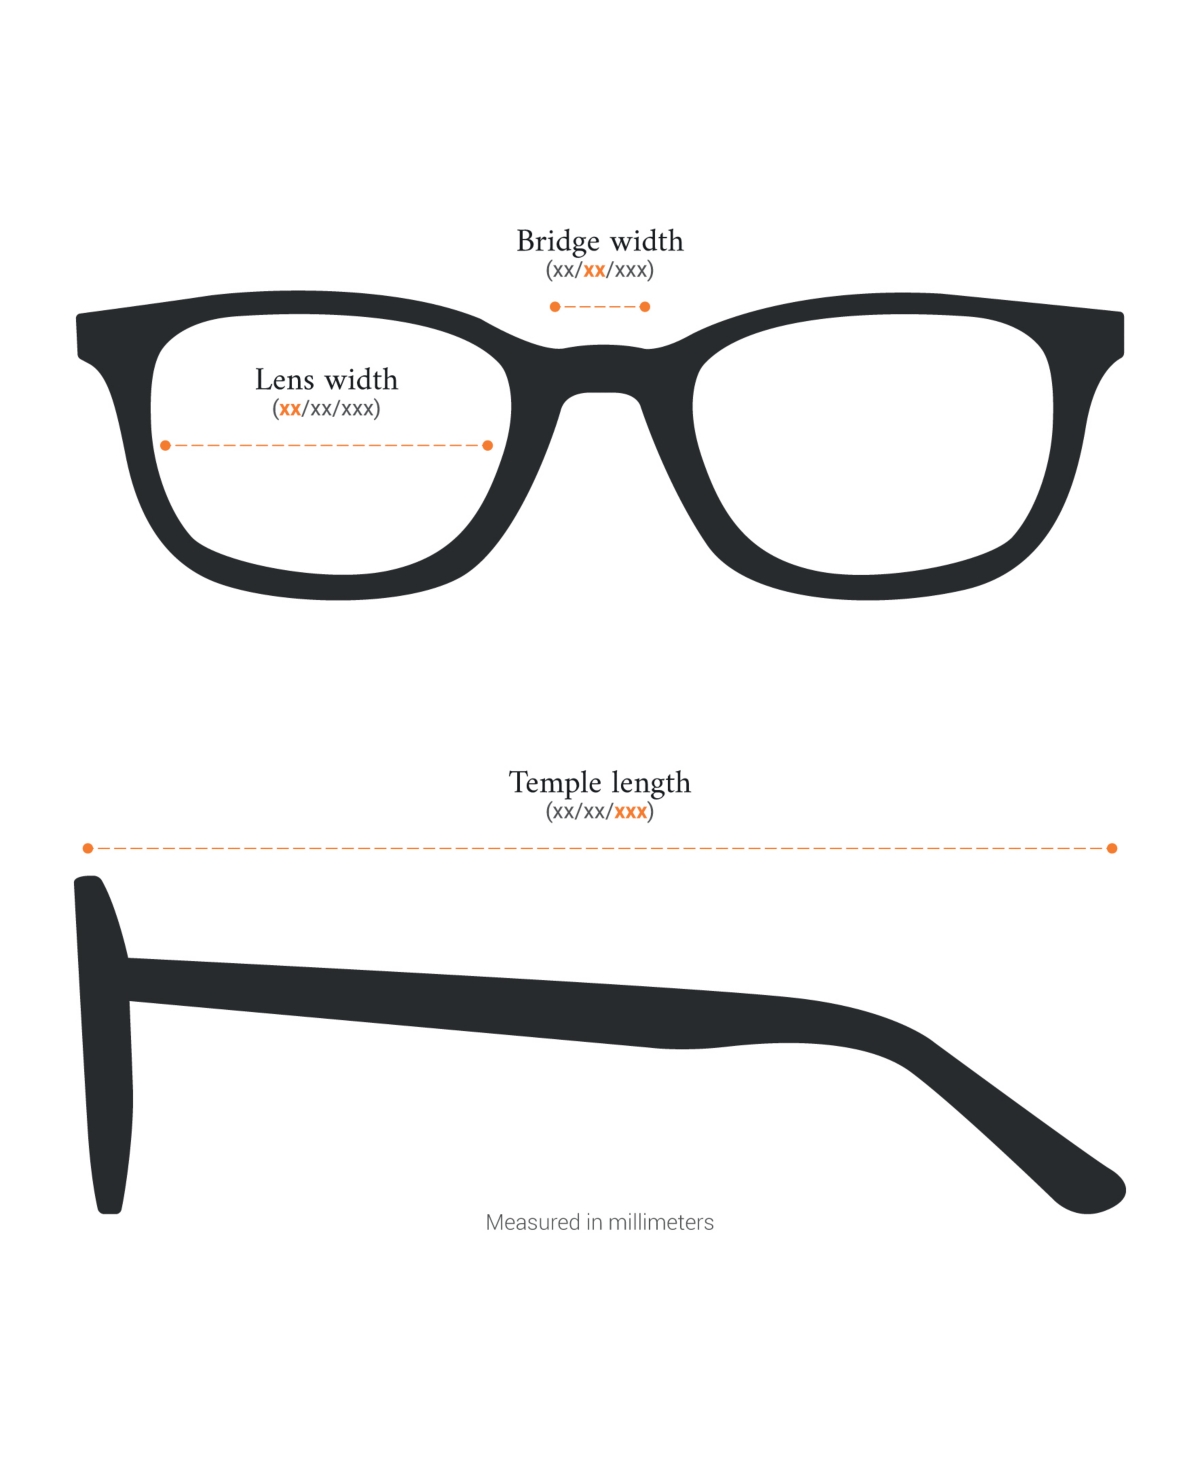 Shop Oakley Unisex Polarized Sunglasses, Radarlock Path (low Bridge Fit) In Polished Black